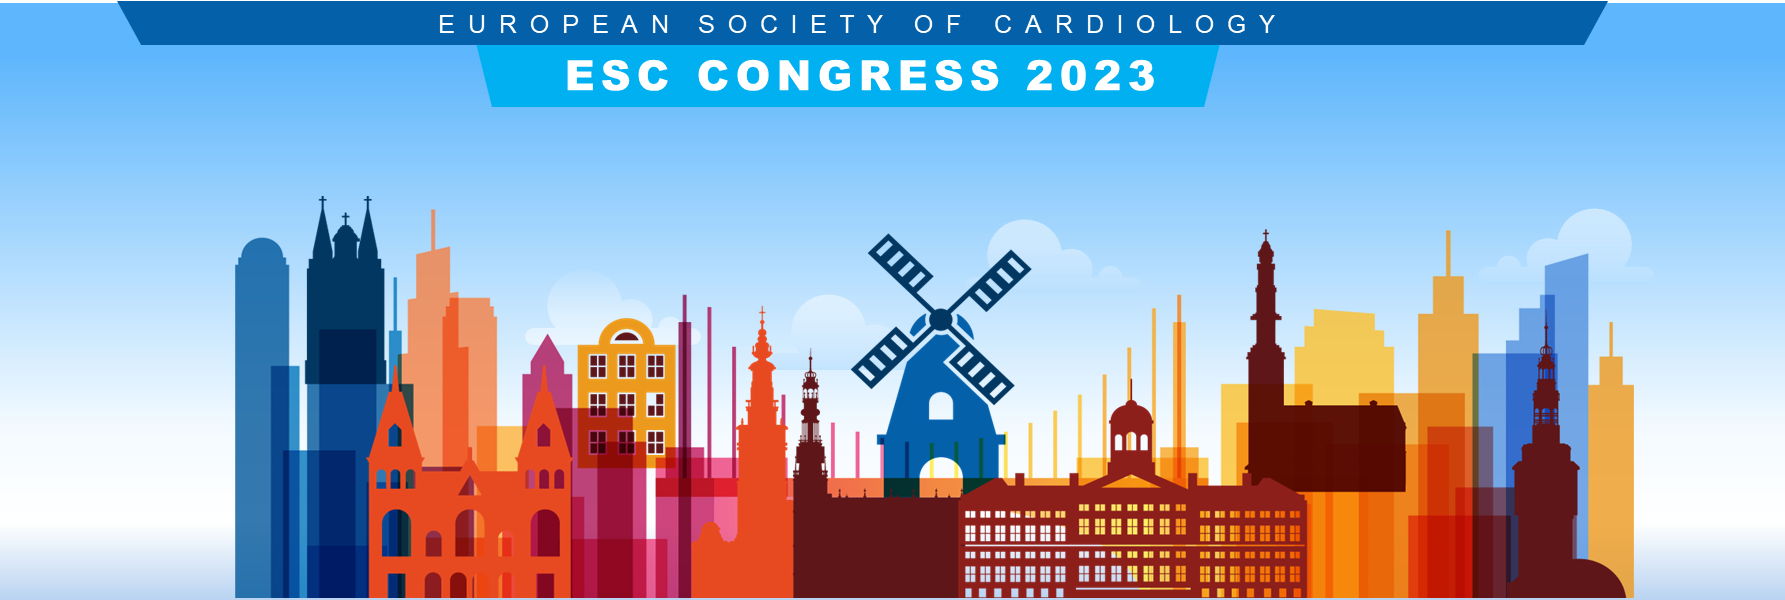 ESC-congres 2023 overzichtsprogramma